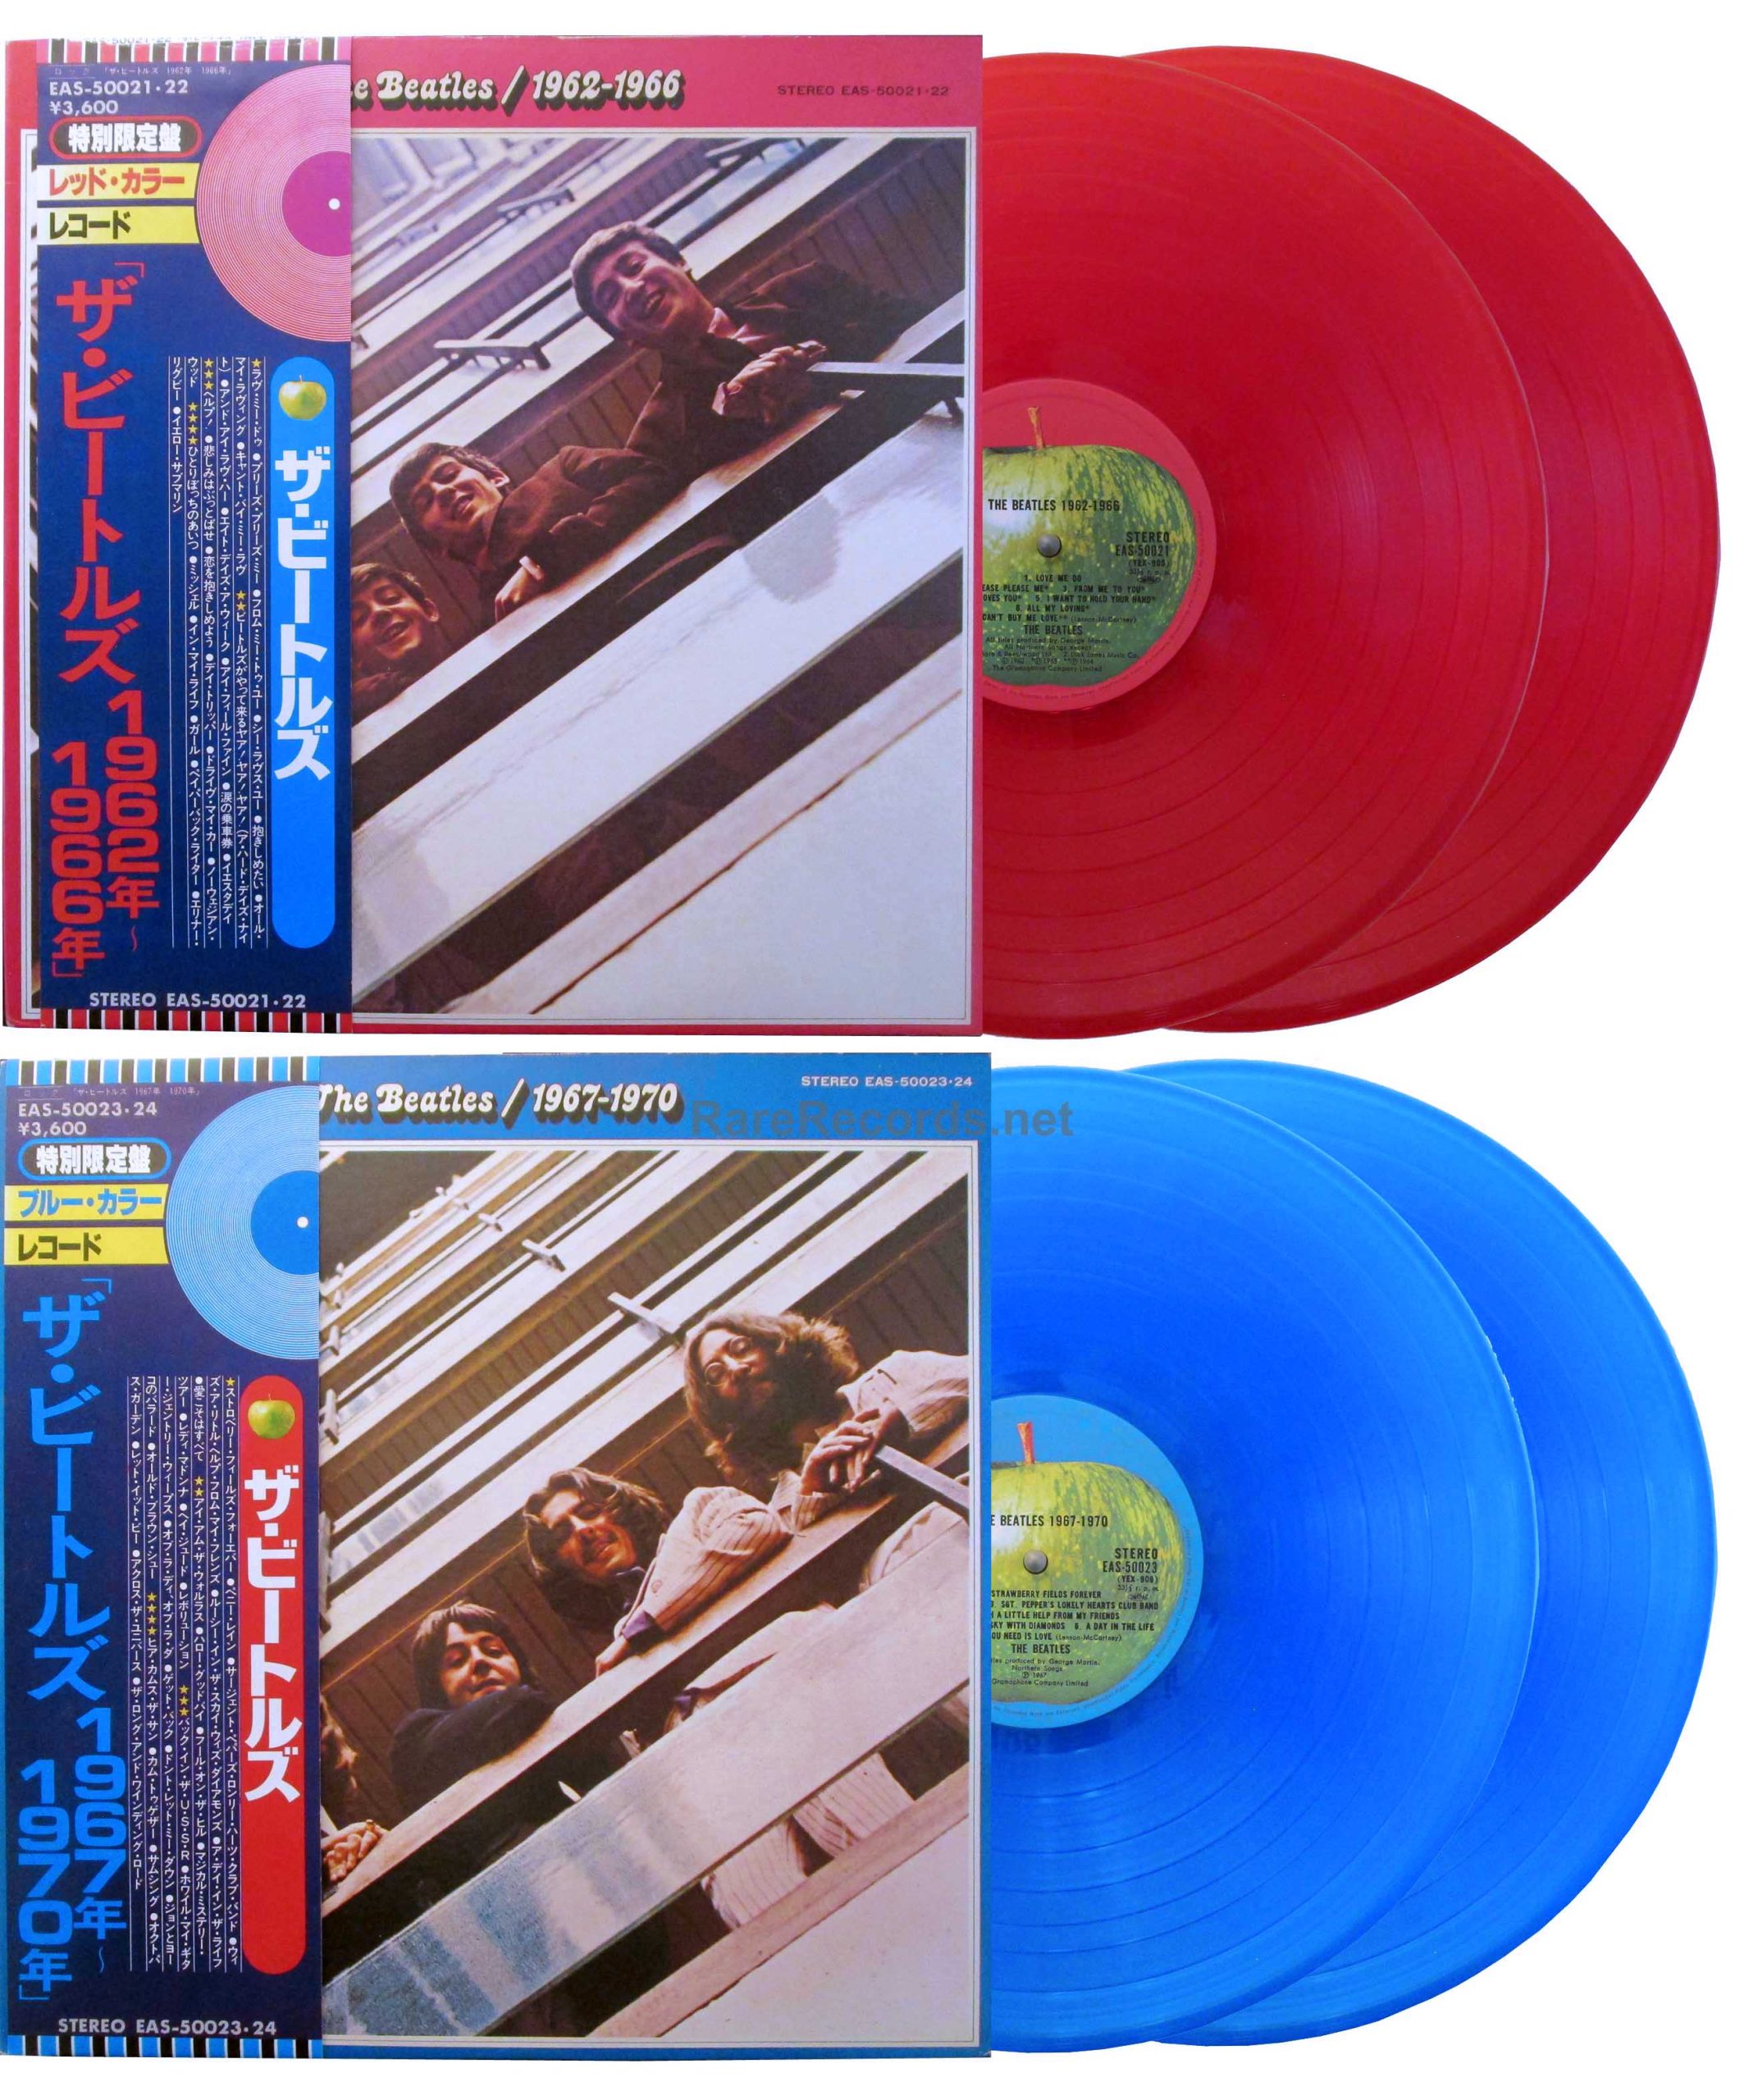 Beatles - 1962-1966/1967-1970 1978 Japan red/blue vinyl 4 LP set with obi